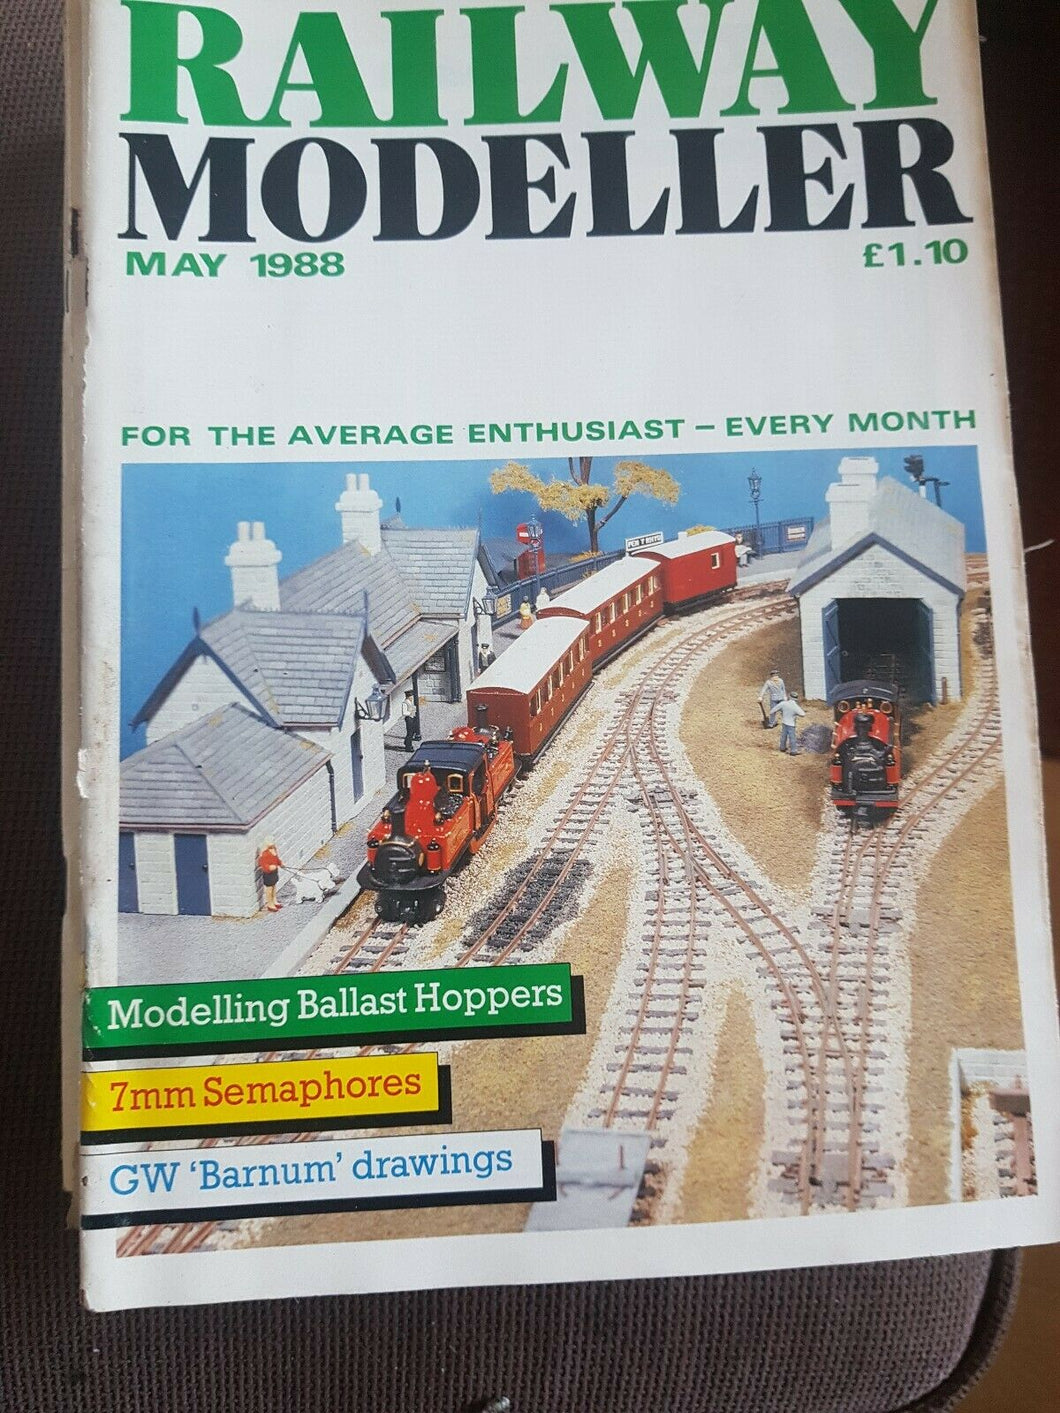 Railway modeller magazine May 1988